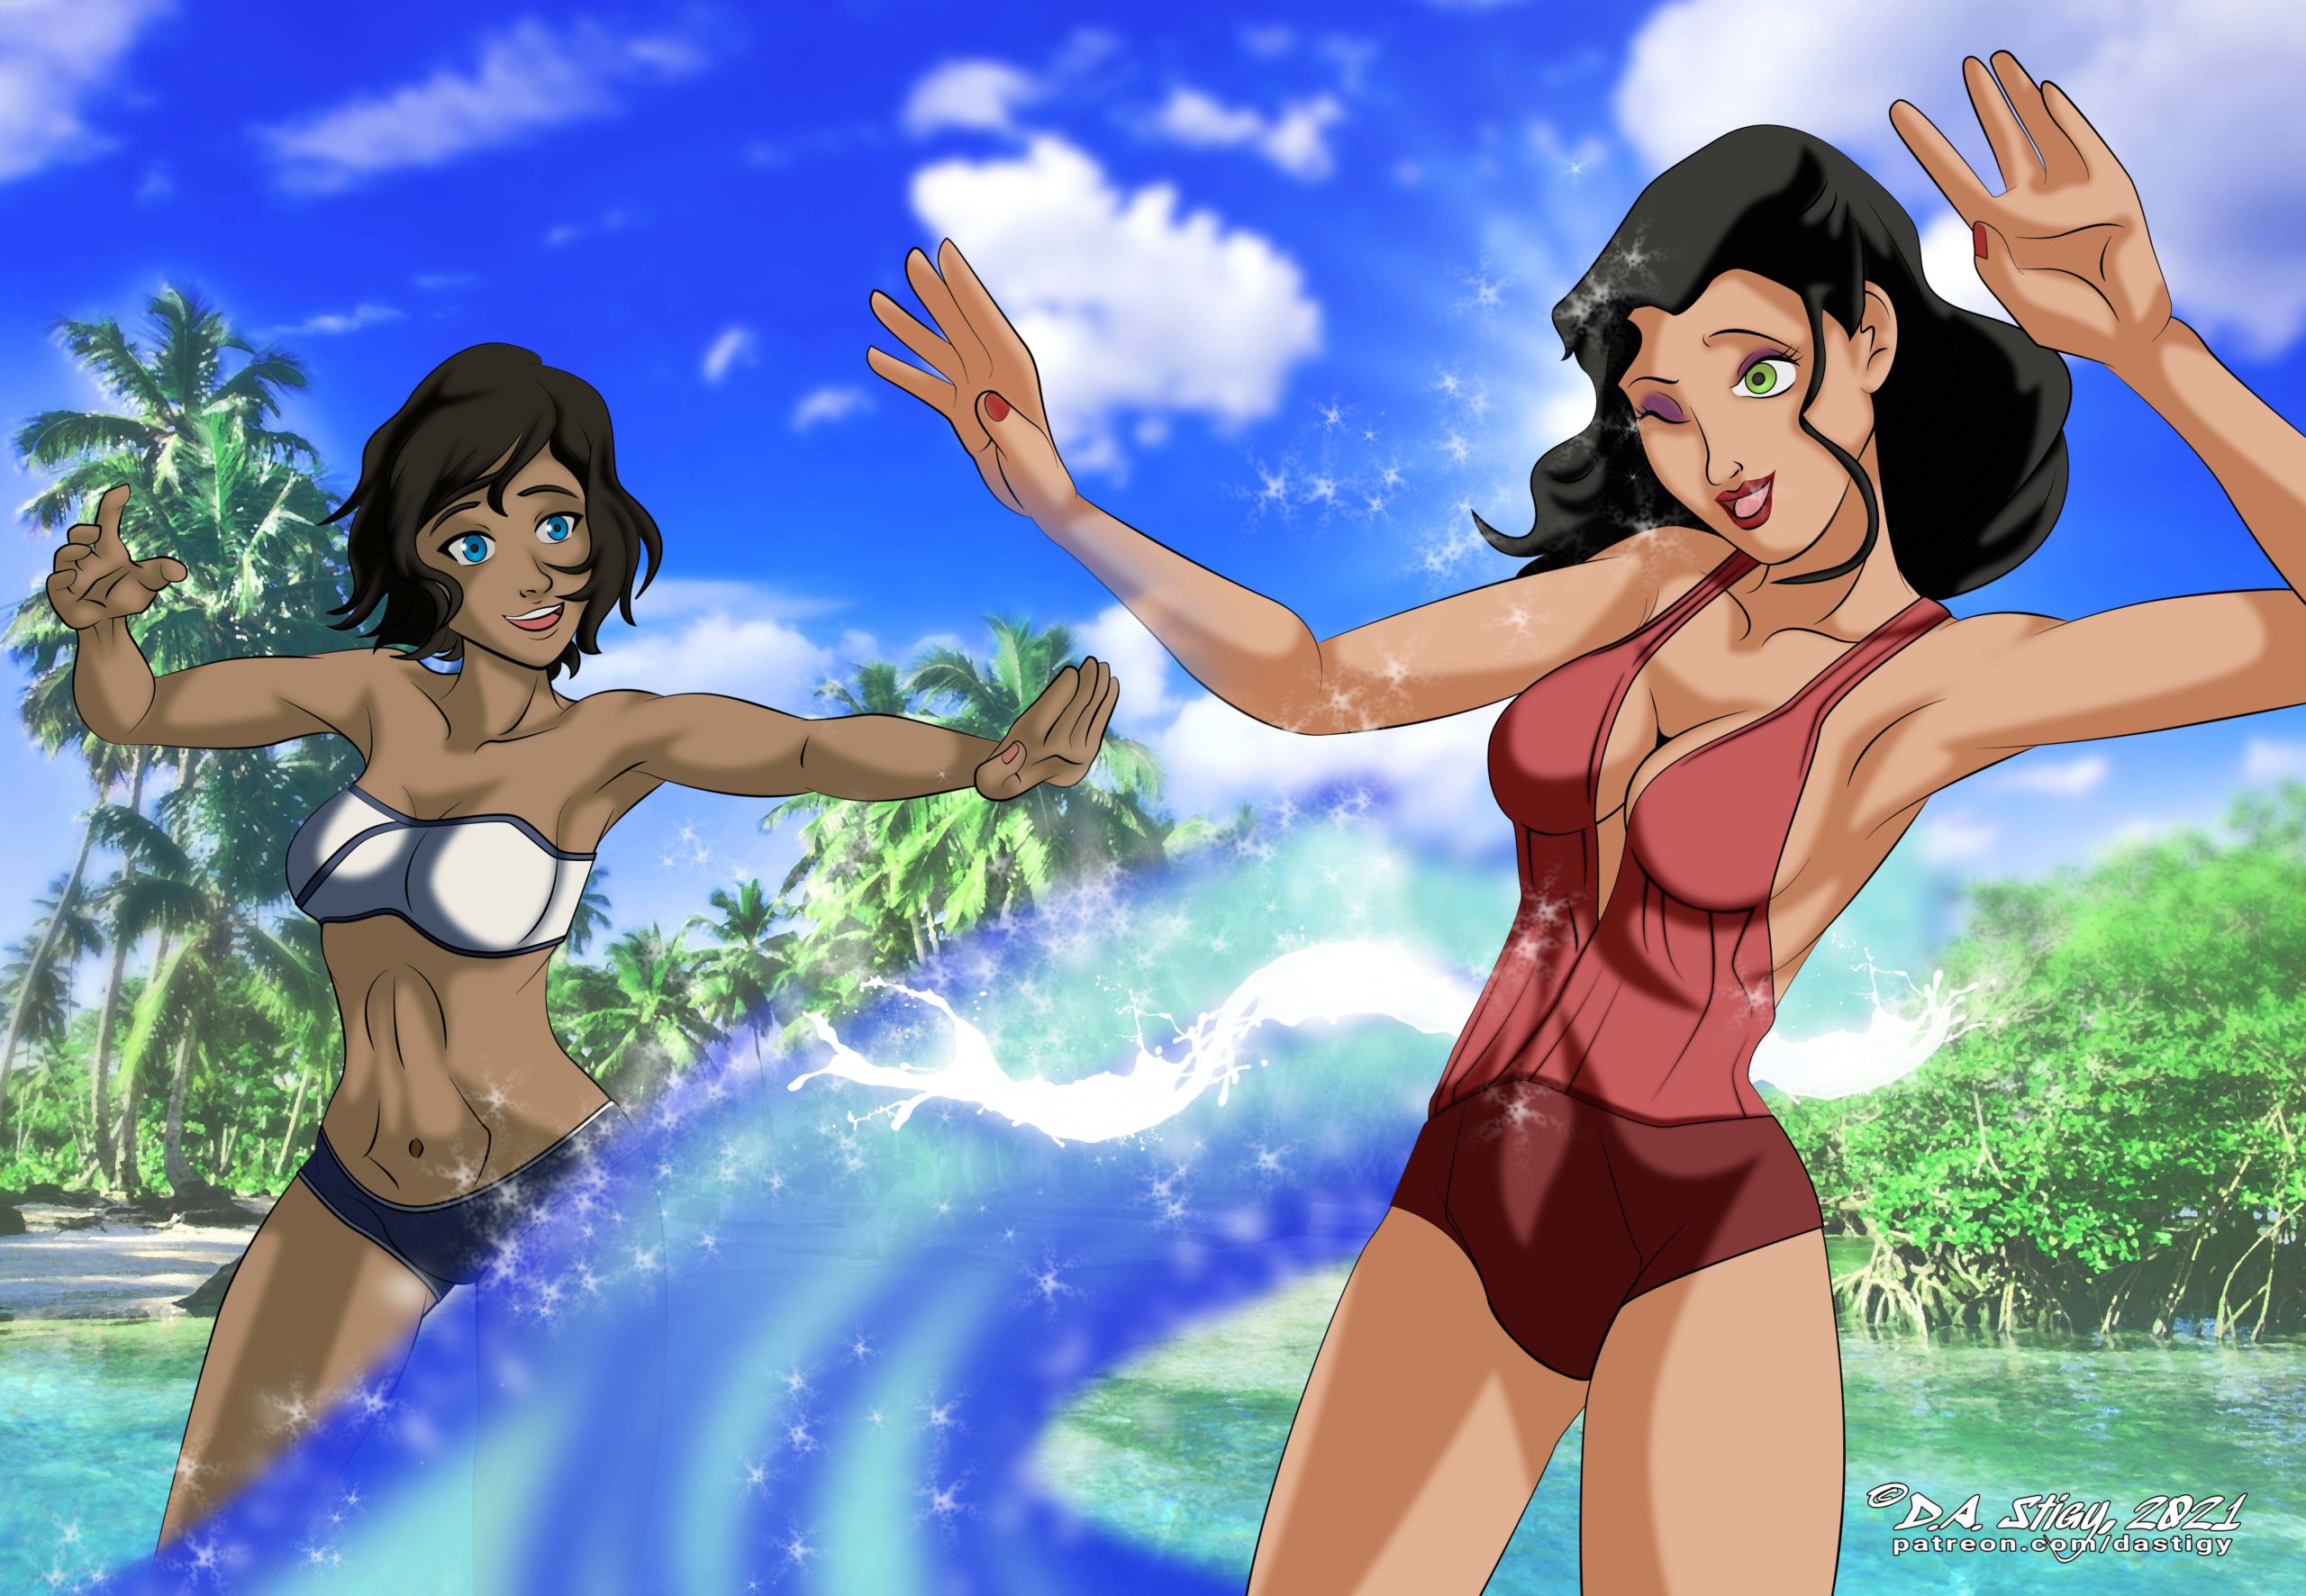 Korra splashing Asami with a waist-high wave